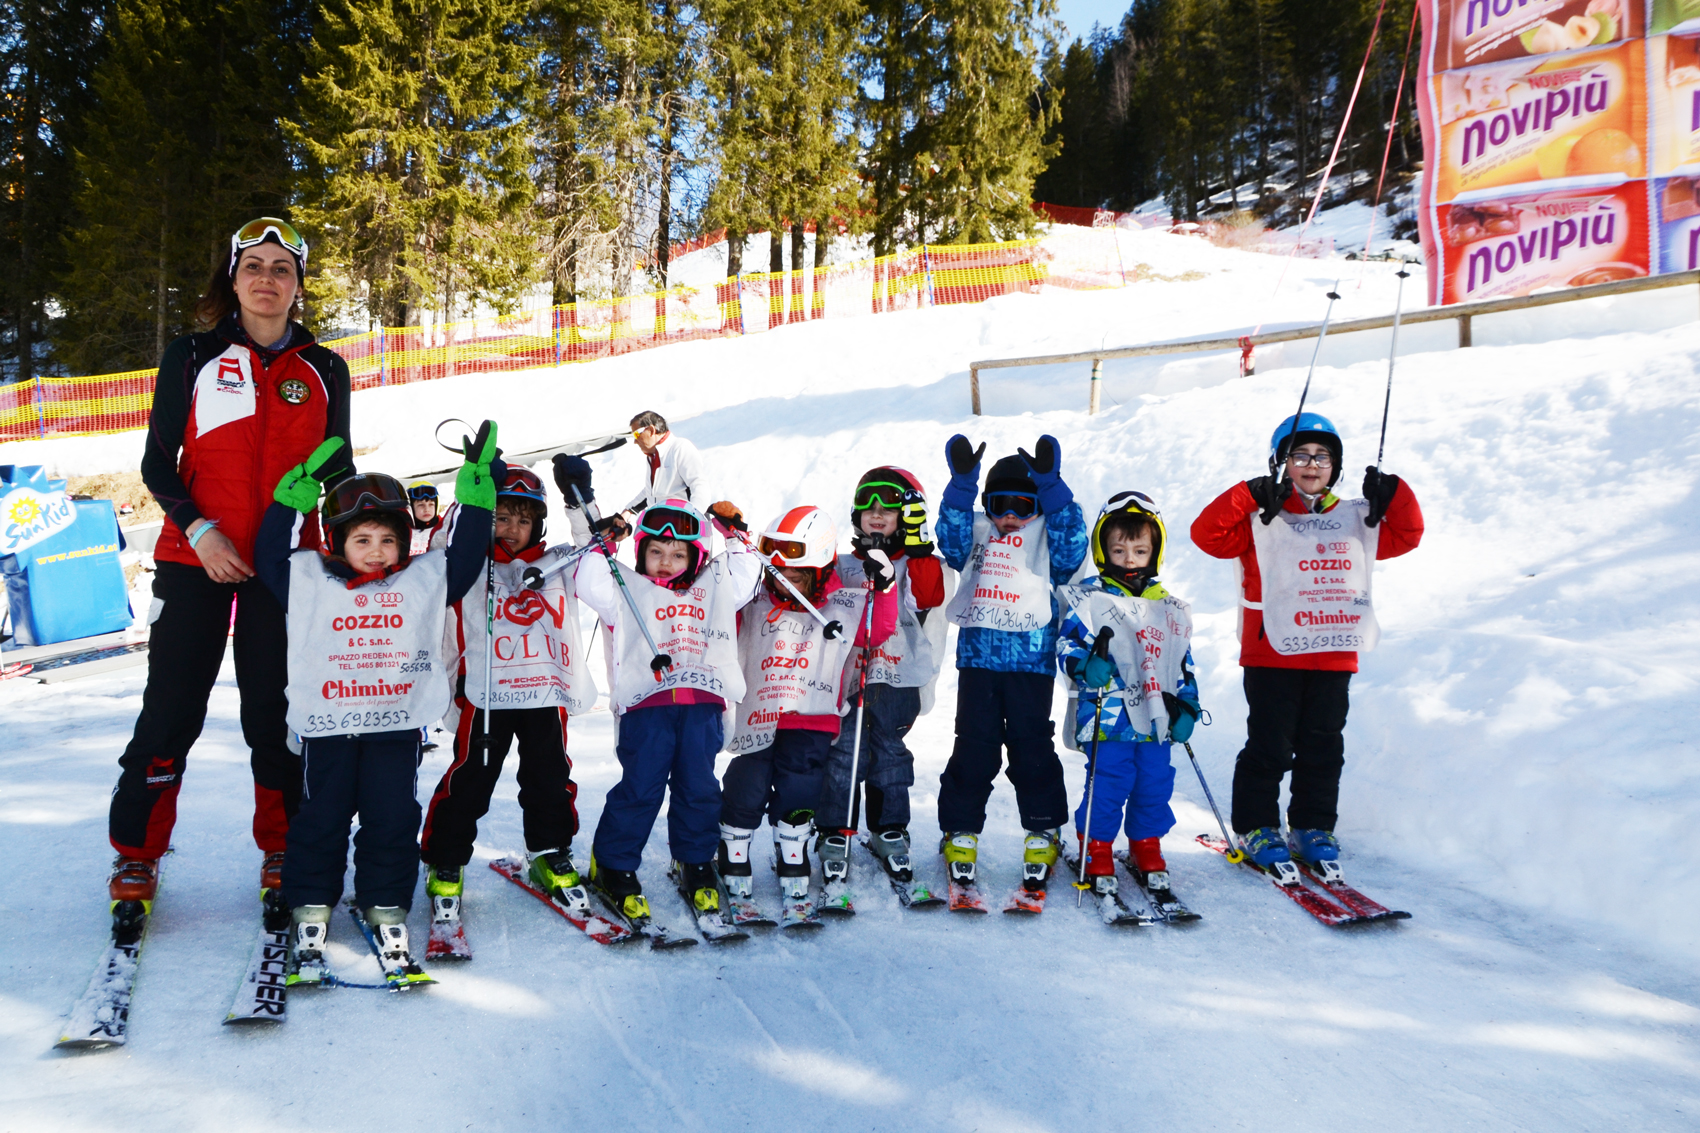 Ski and Snowboard School Marilleva in Italy, Europe | Snowboarding,Skiing - Rated 3.7